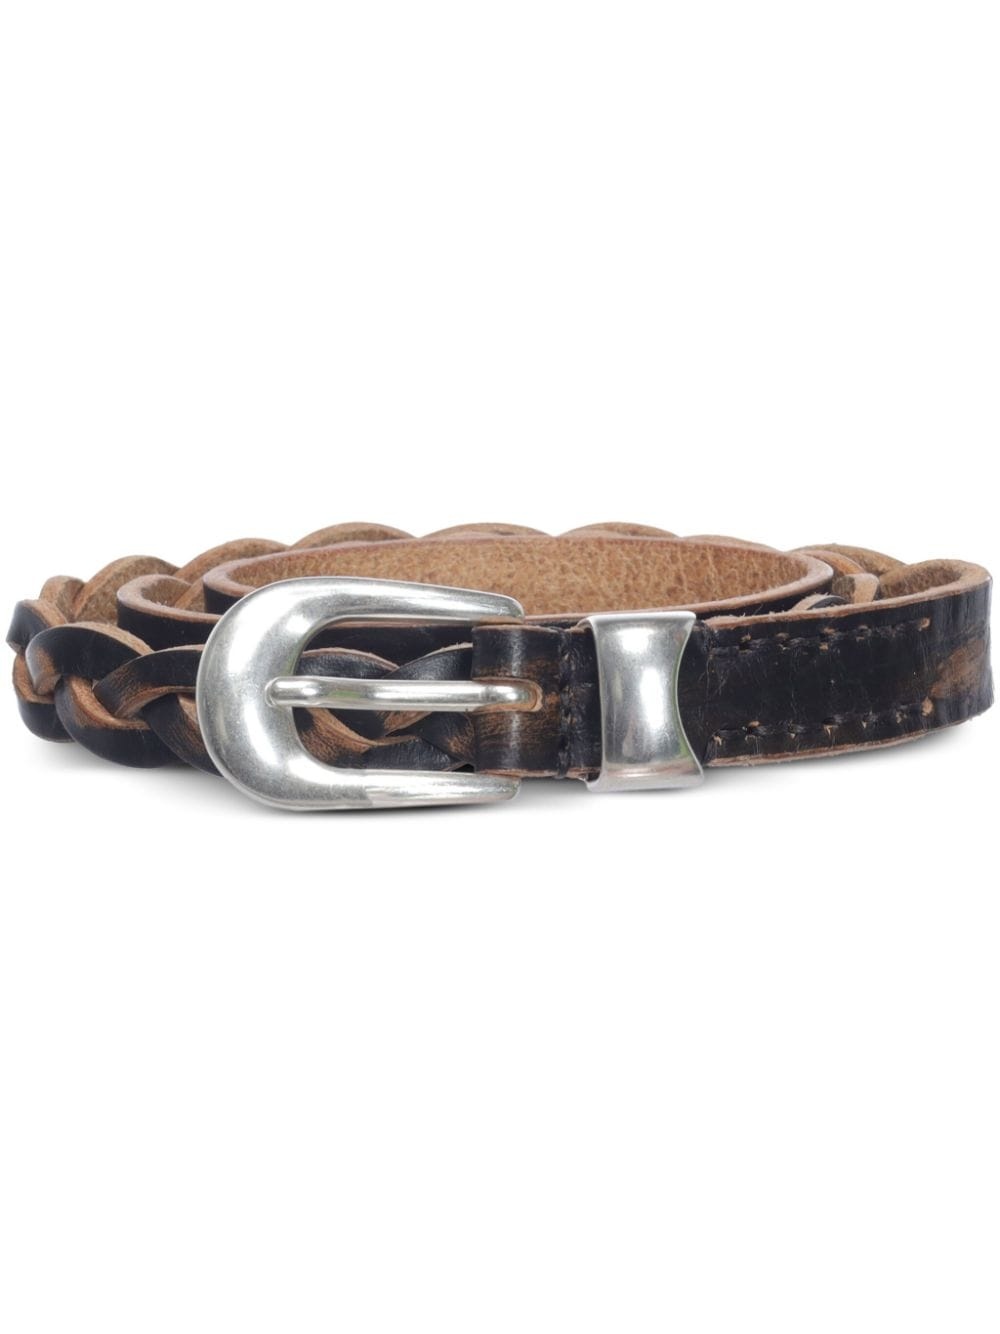 distressed leather belt - 1